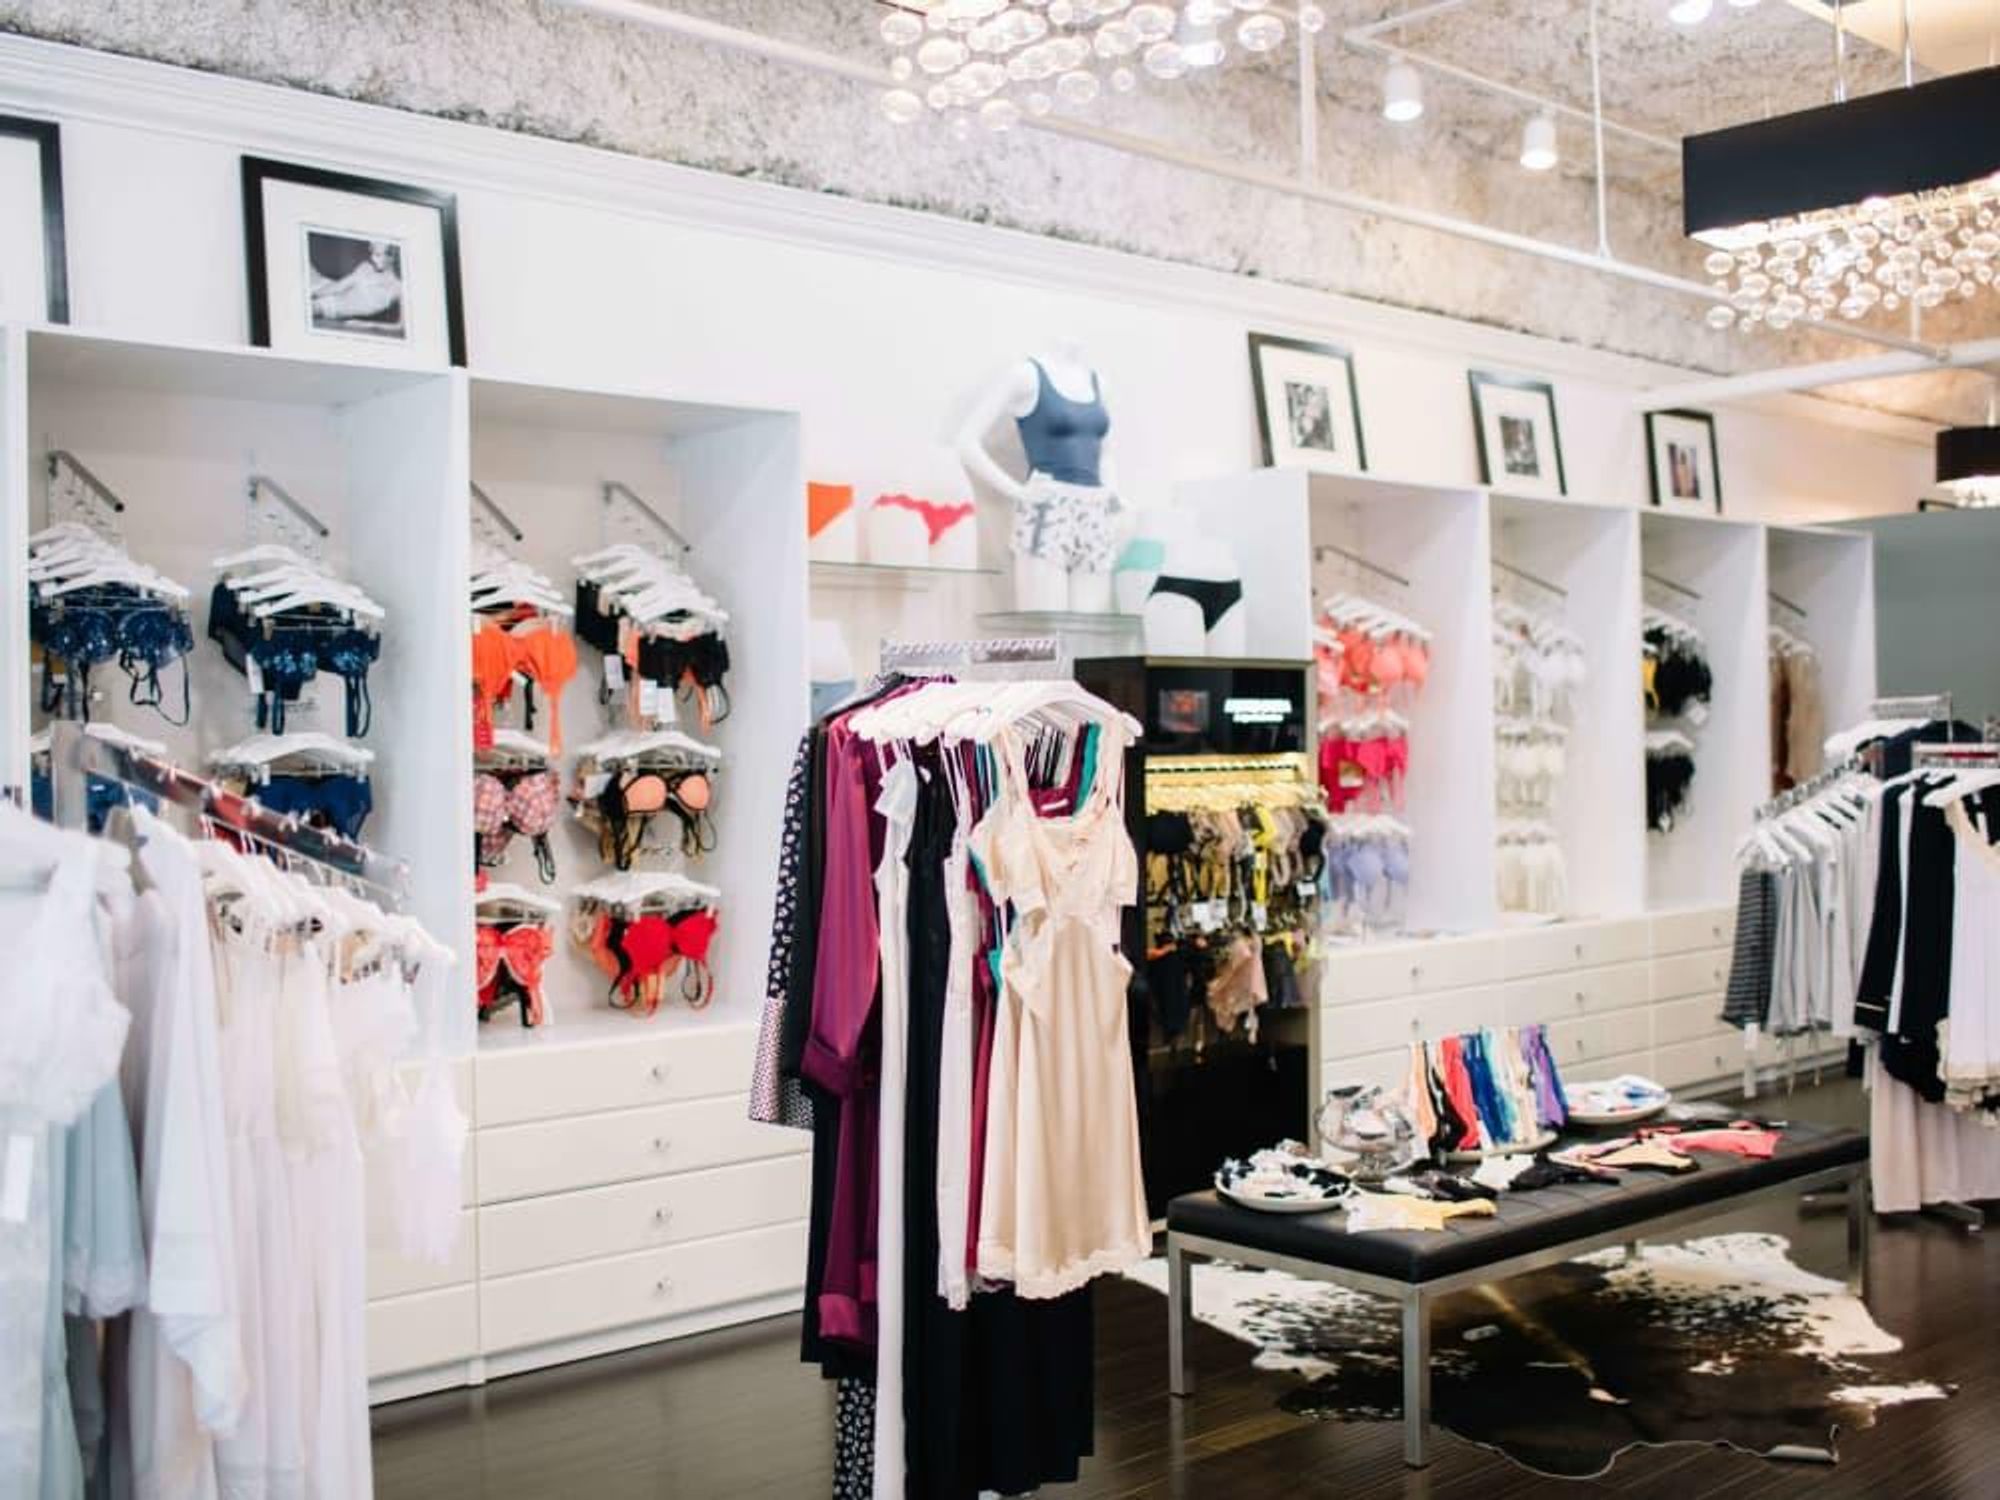 Popular Austin lingerie shop reveals sexy new location